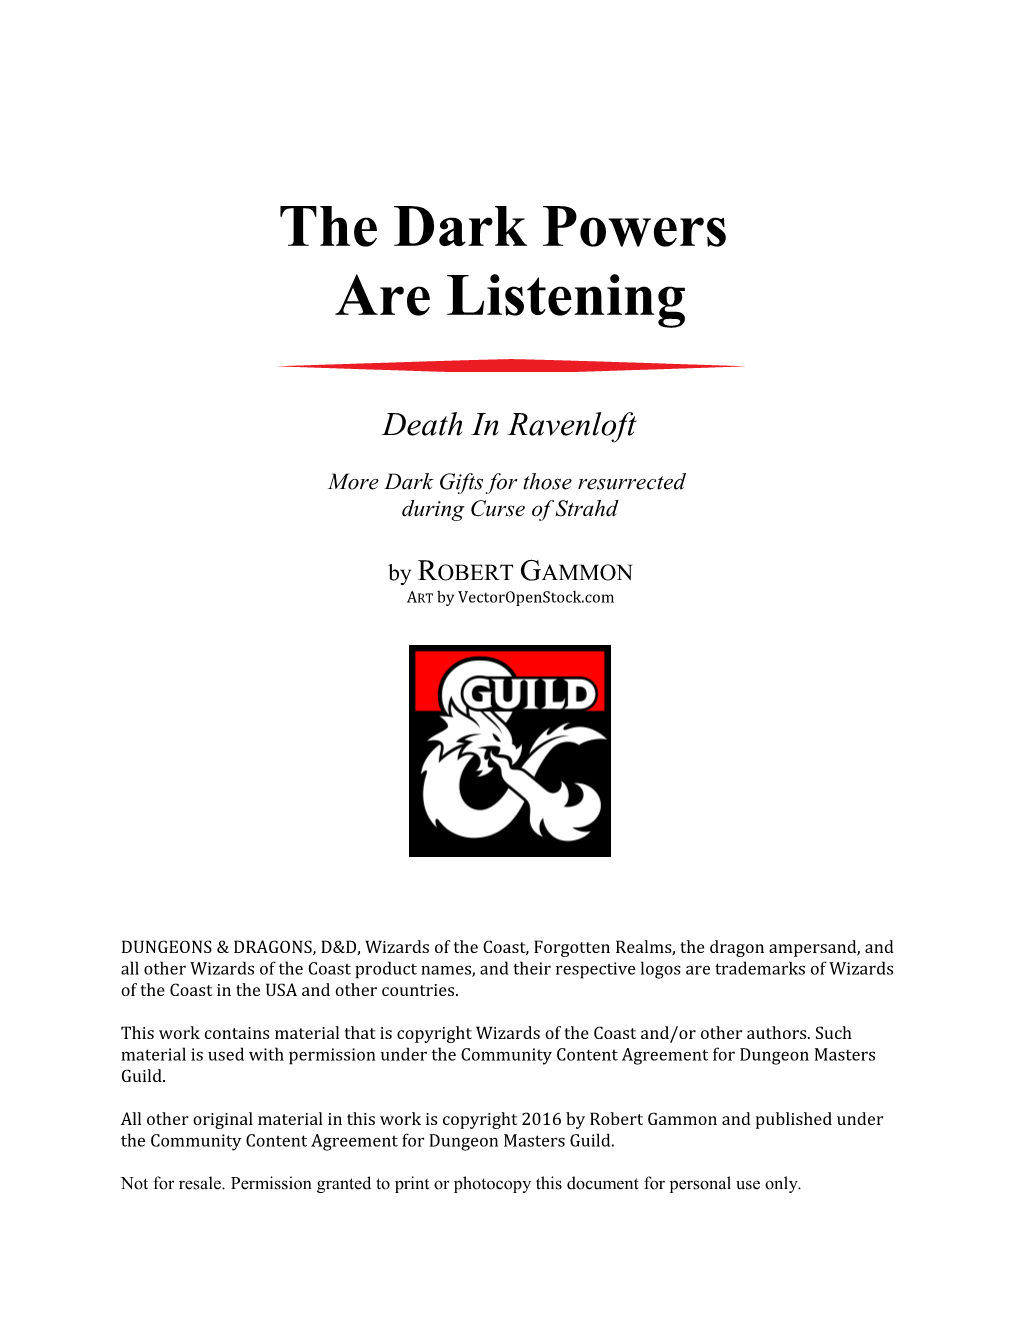 The Dark Powers Are Listening